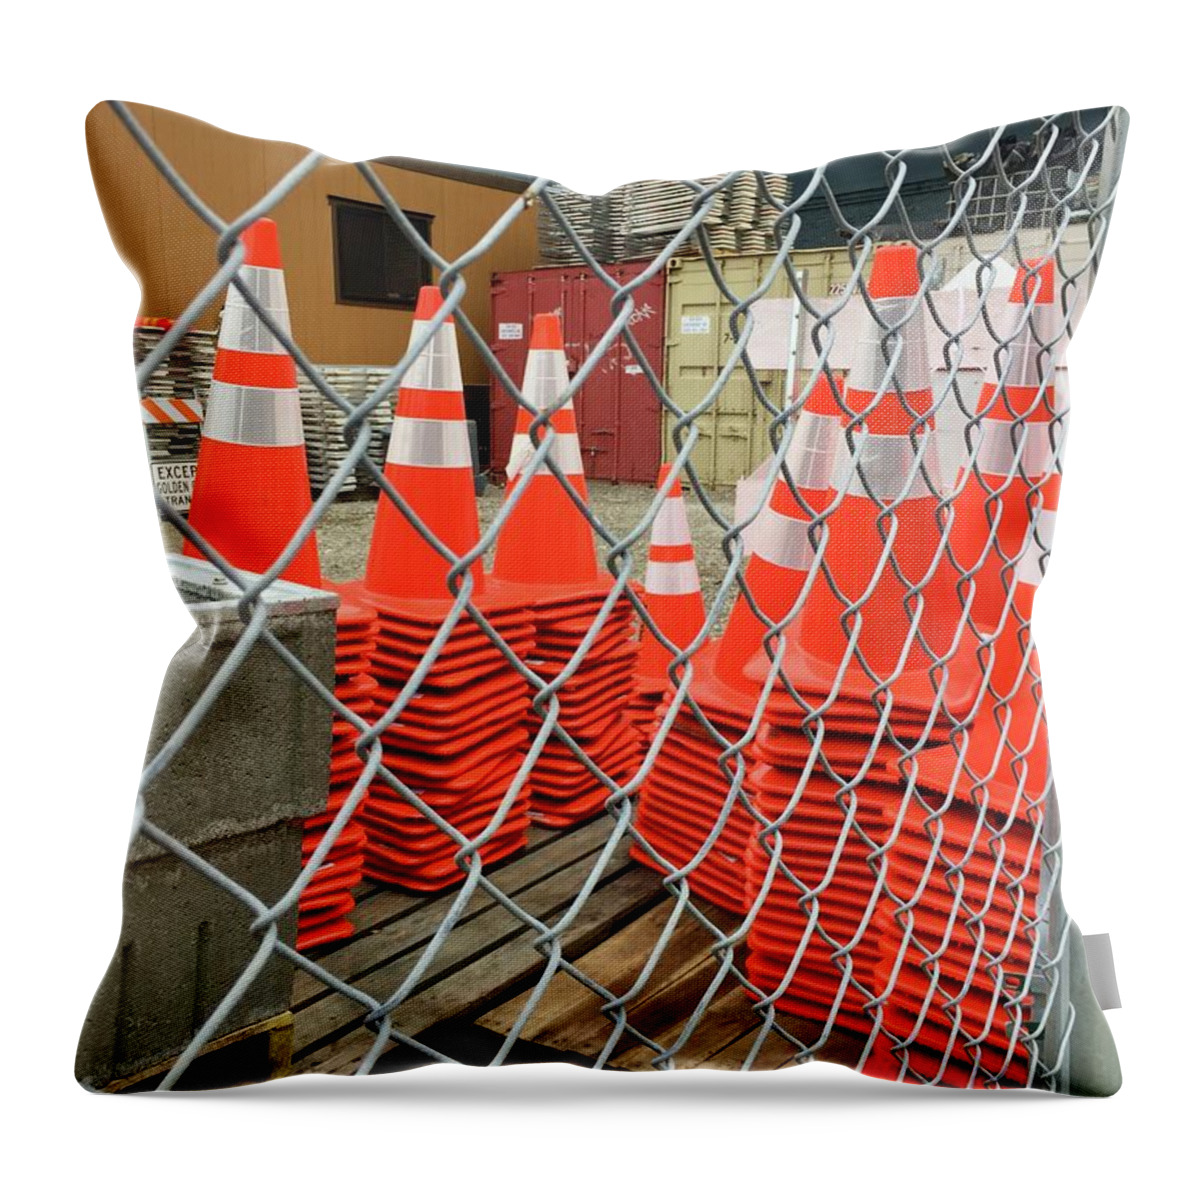 Van Ness Throw Pillow featuring the photograph Van Ness Construction Series 1-15 by J Doyne Miller